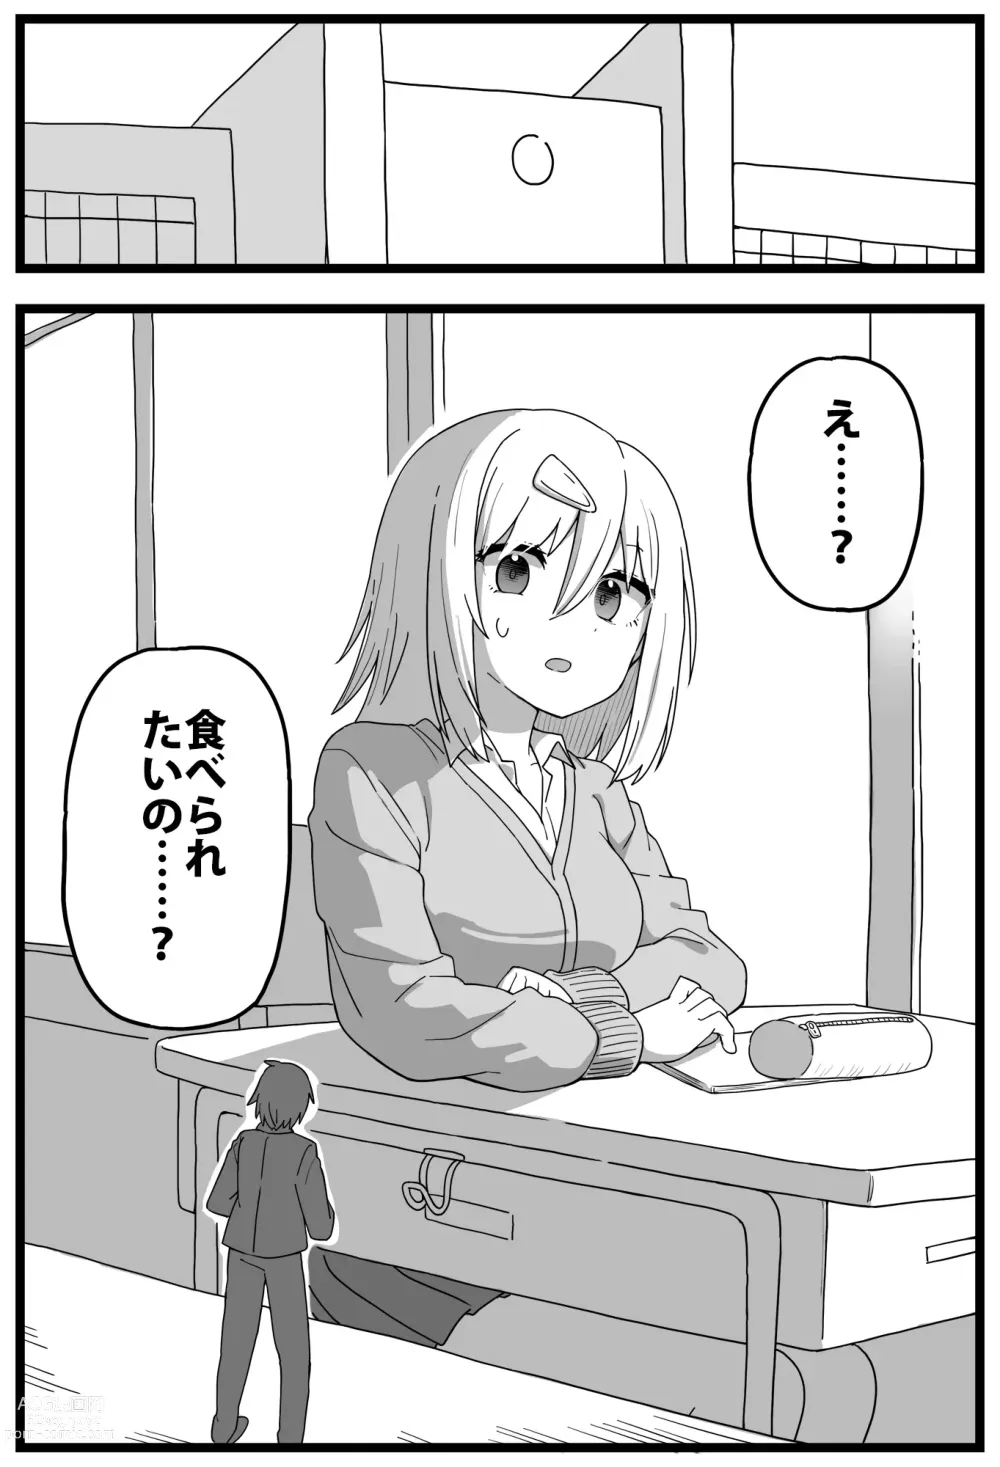 Page 1 of doujinshi Doushitemo Onnanoko ni Taberaretai Manga